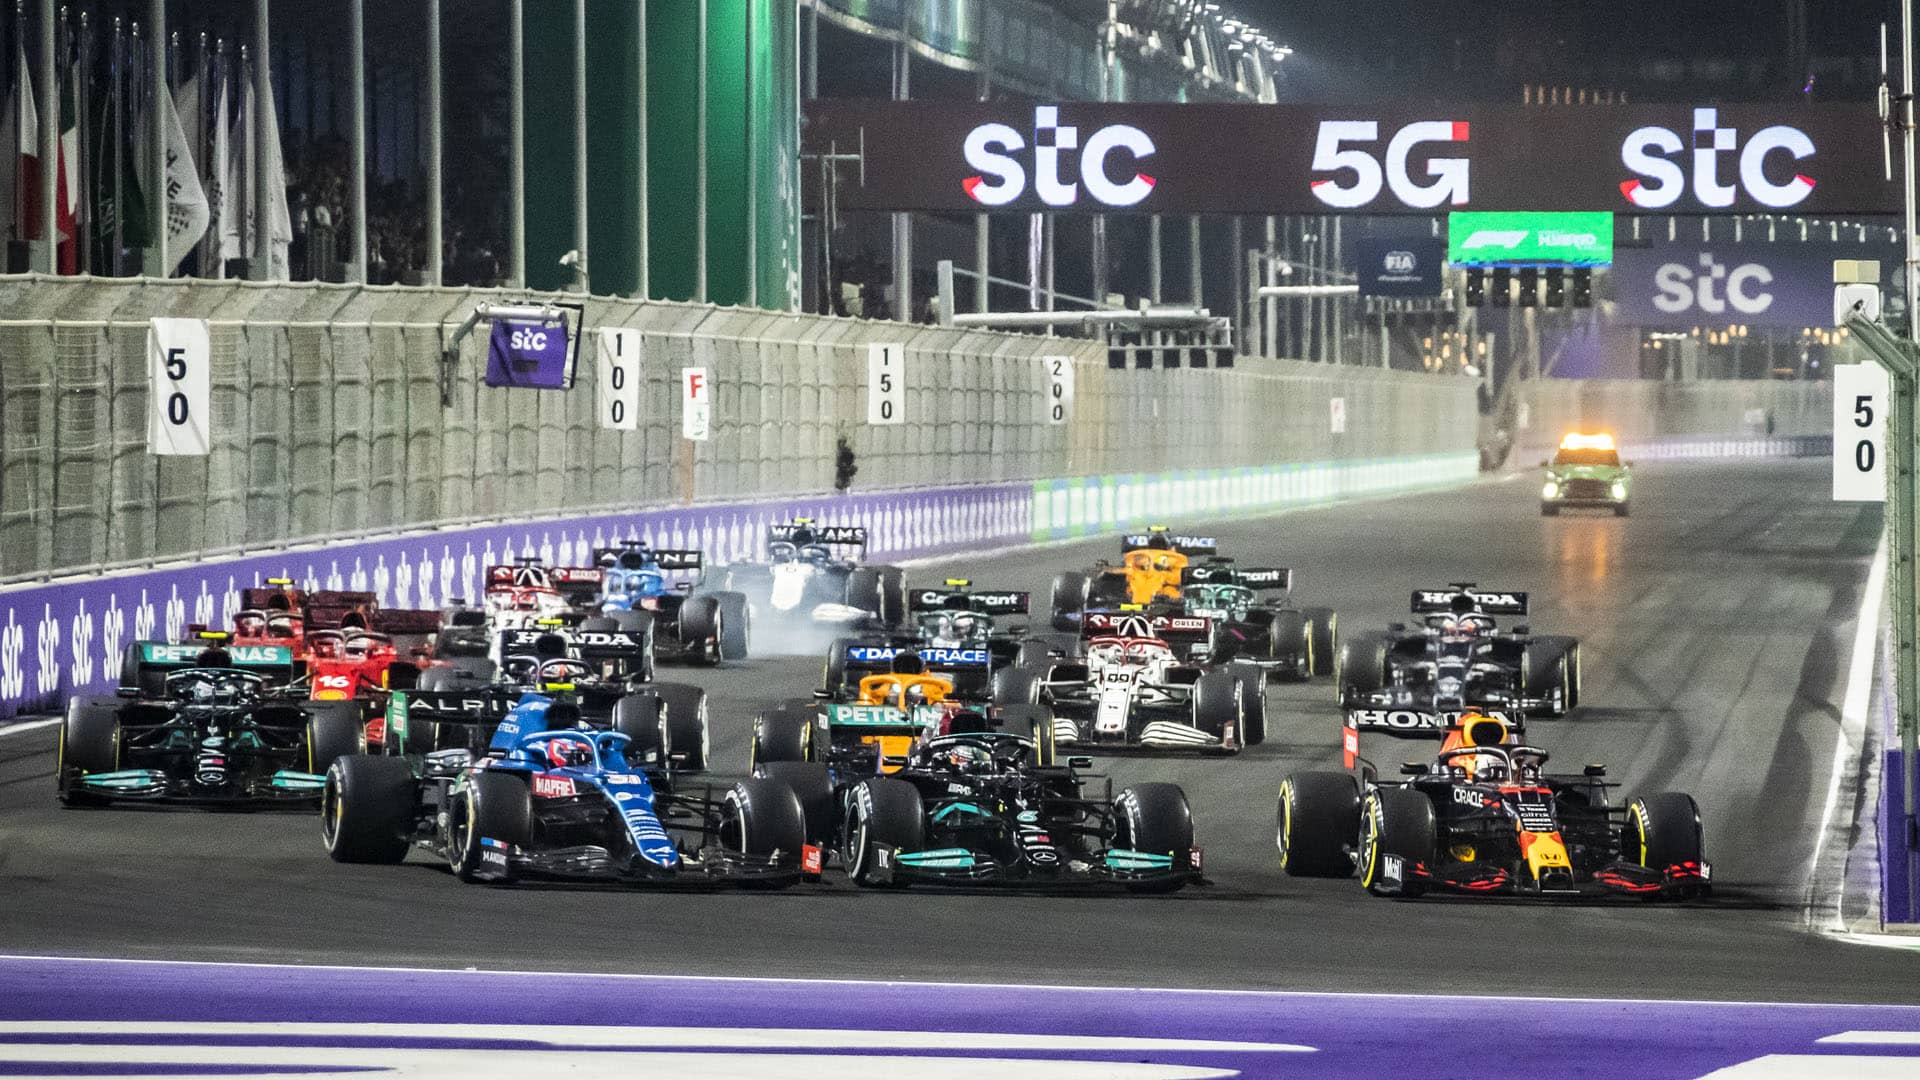 Saudi Arabia Grand Prix 2022 - F1 Race